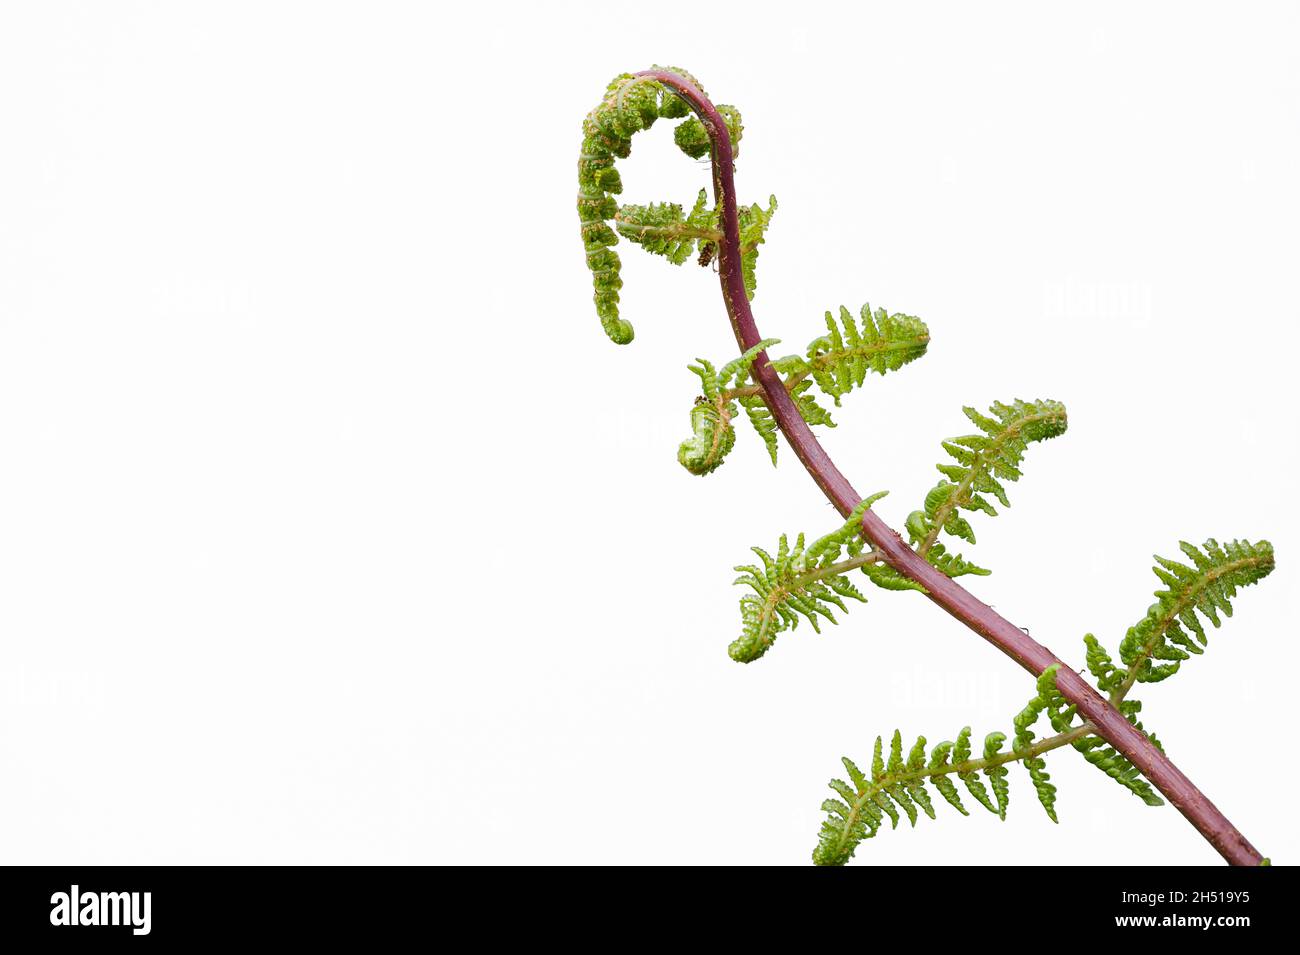 Fresh single fern leaf against a white background Stock Photo